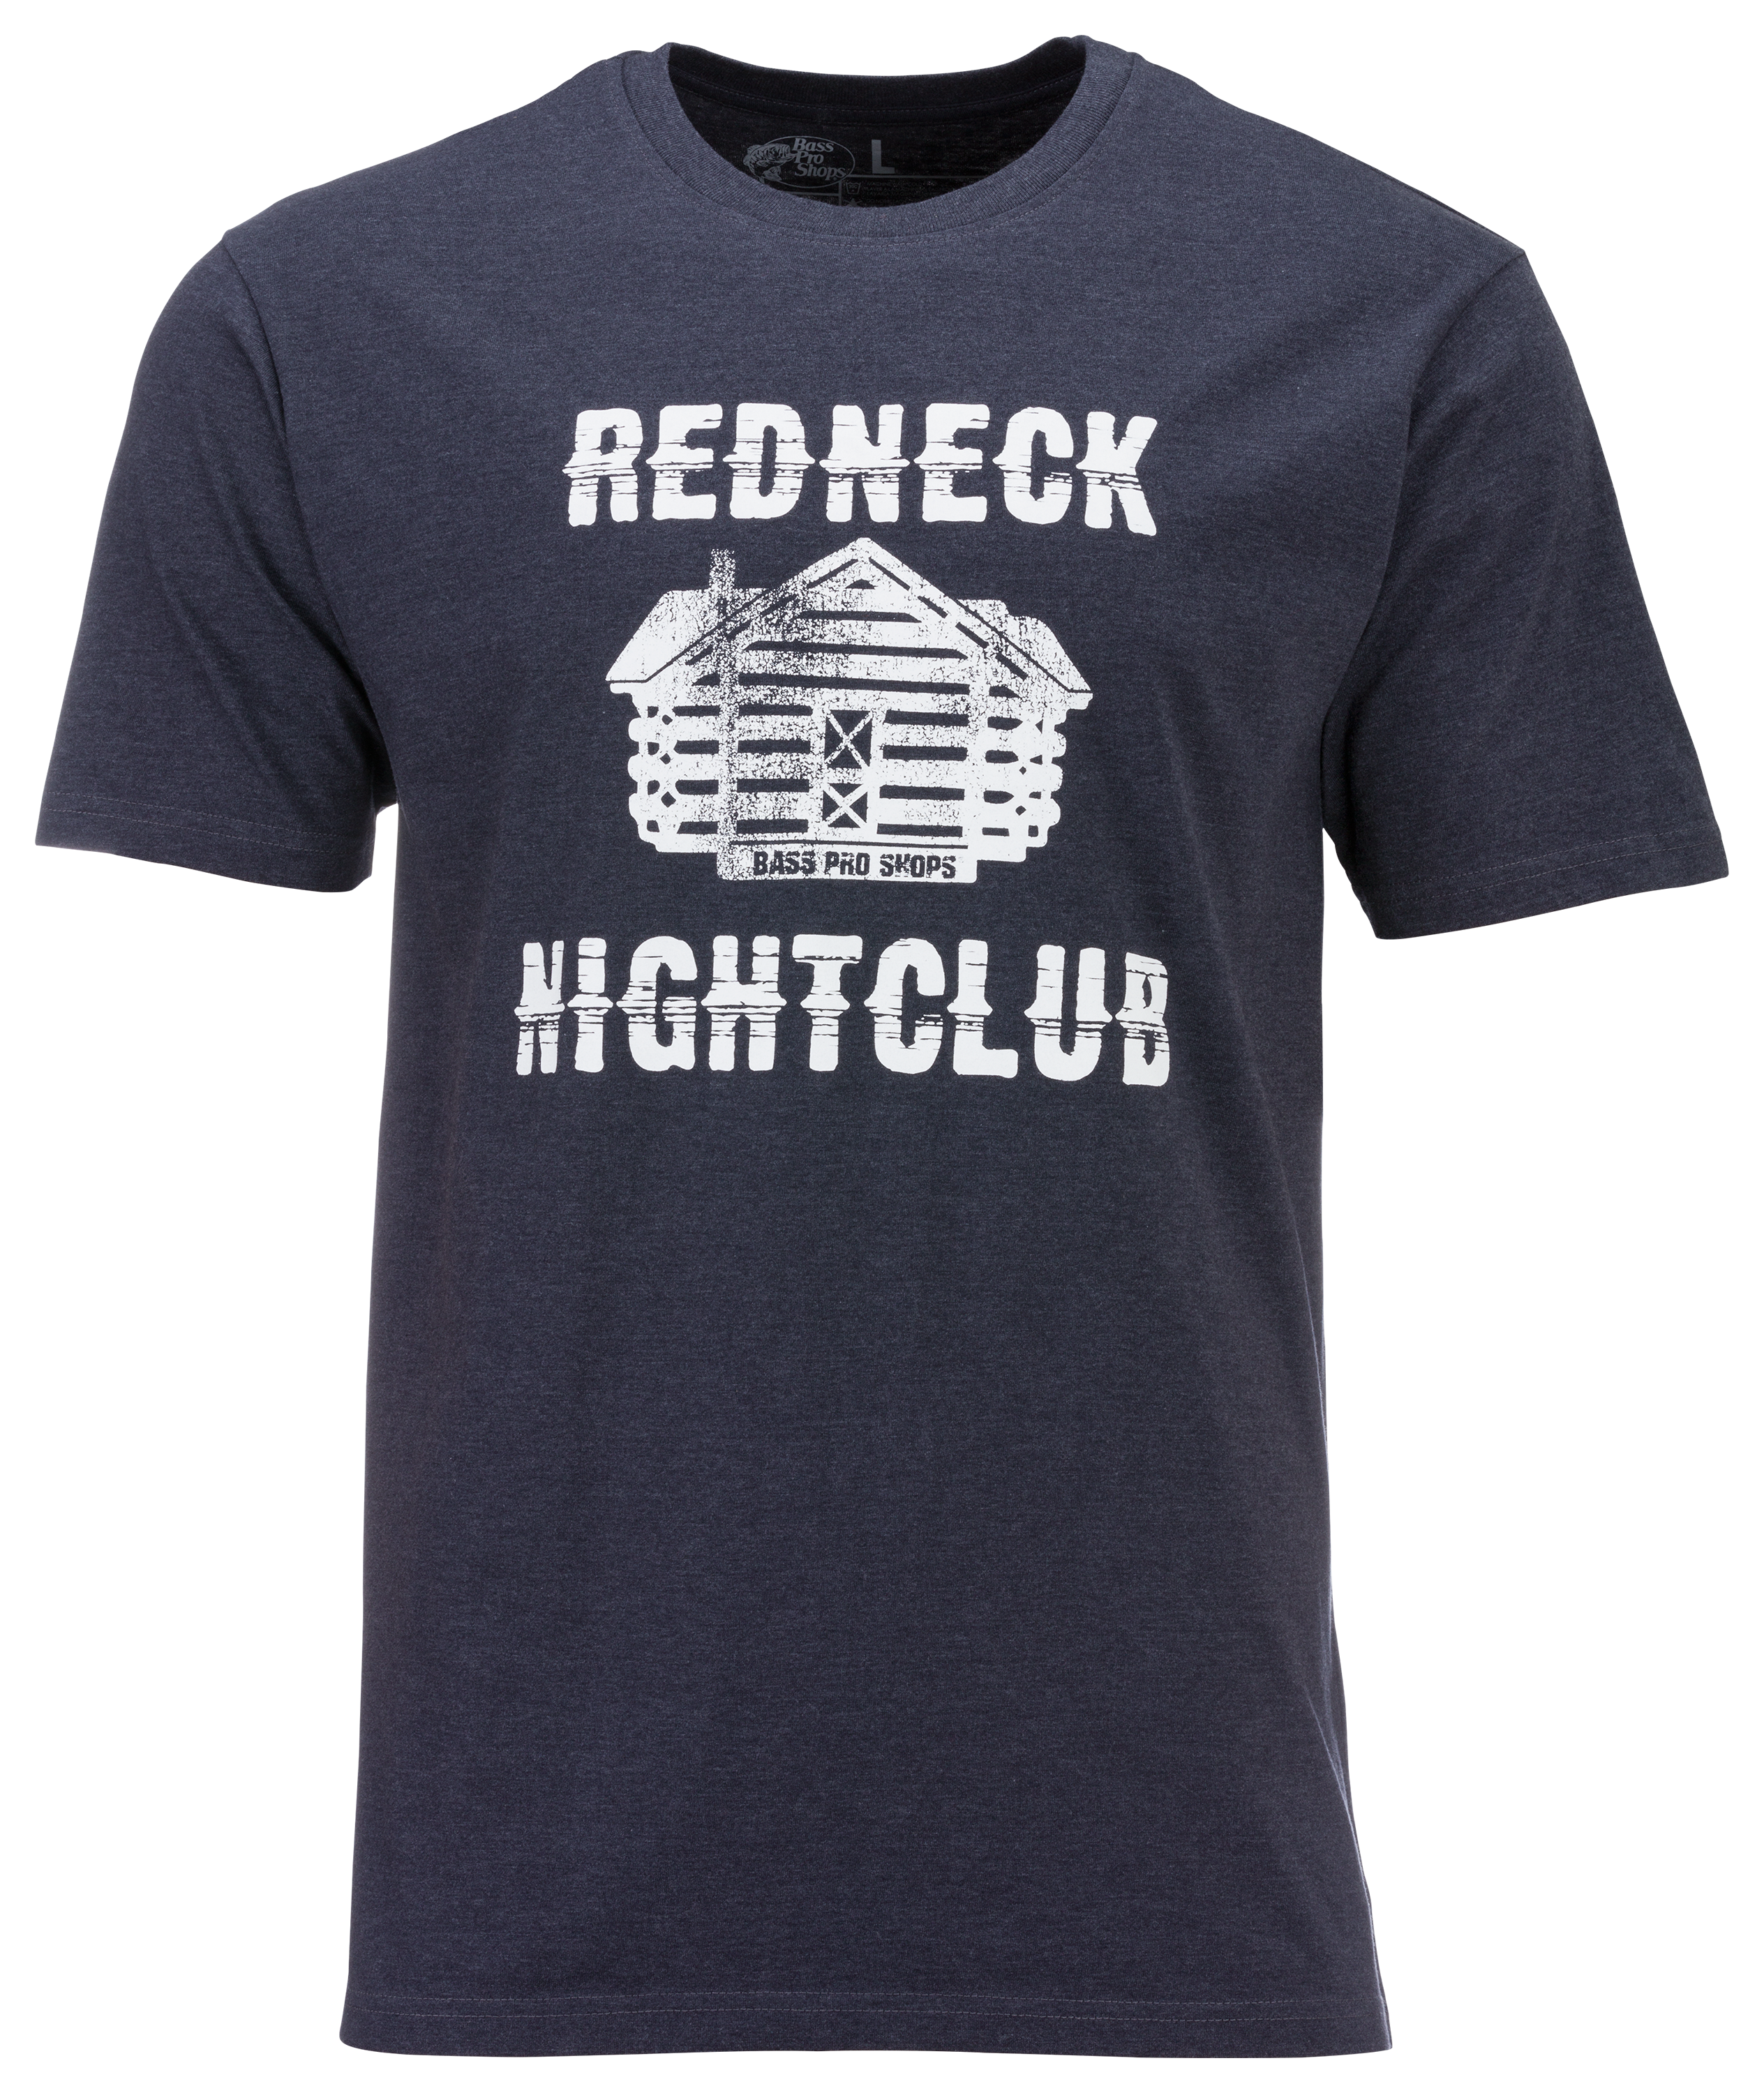 Bass Pro Shops Redneck Nightclub T-Shirt for Men